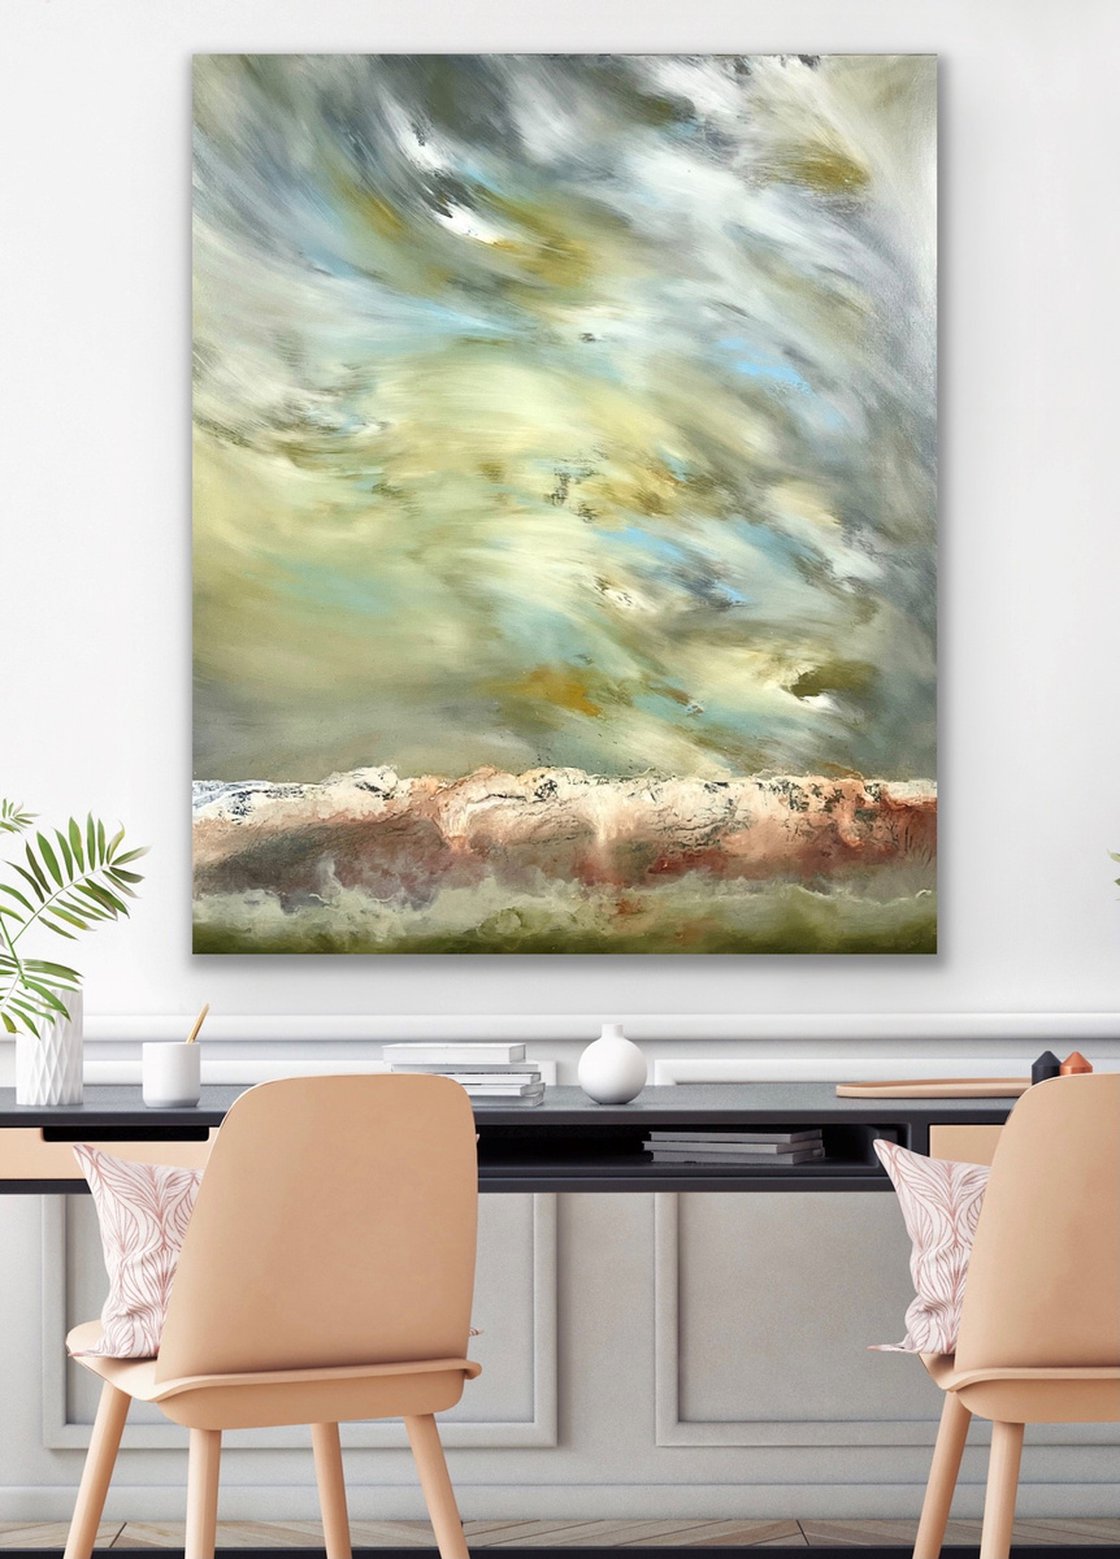 Energy - Large - 120cm x 100cm Oil painting by Jonesy | Artfinder